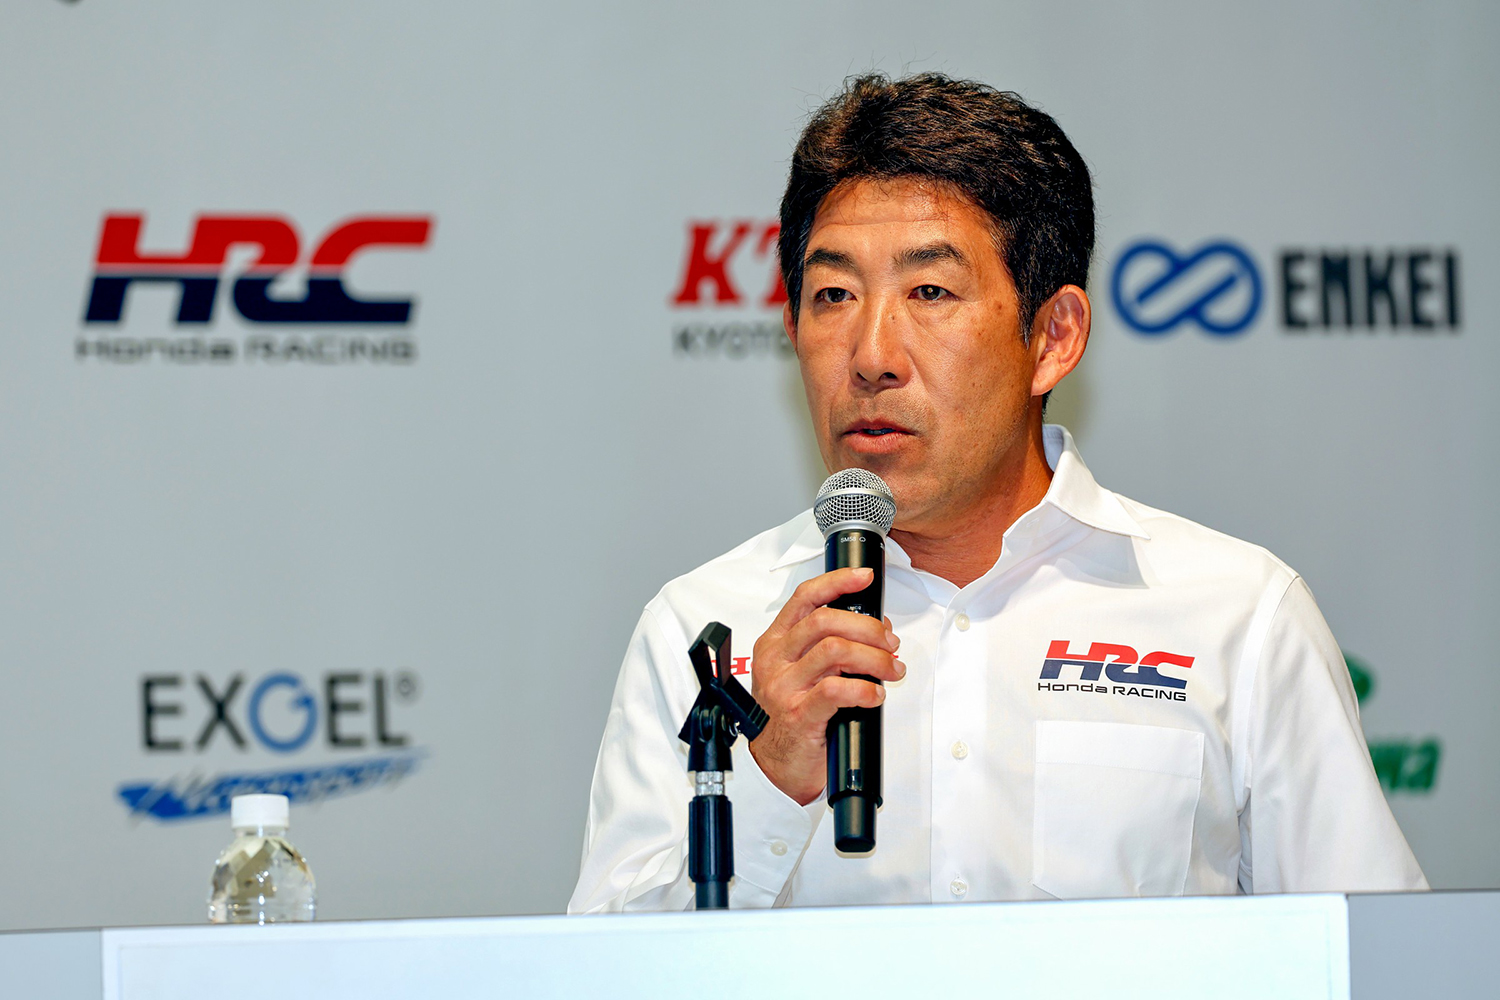 「HRS」は日本のレーシングドライバー養成機関「虎の穴」だった 〜 画像20